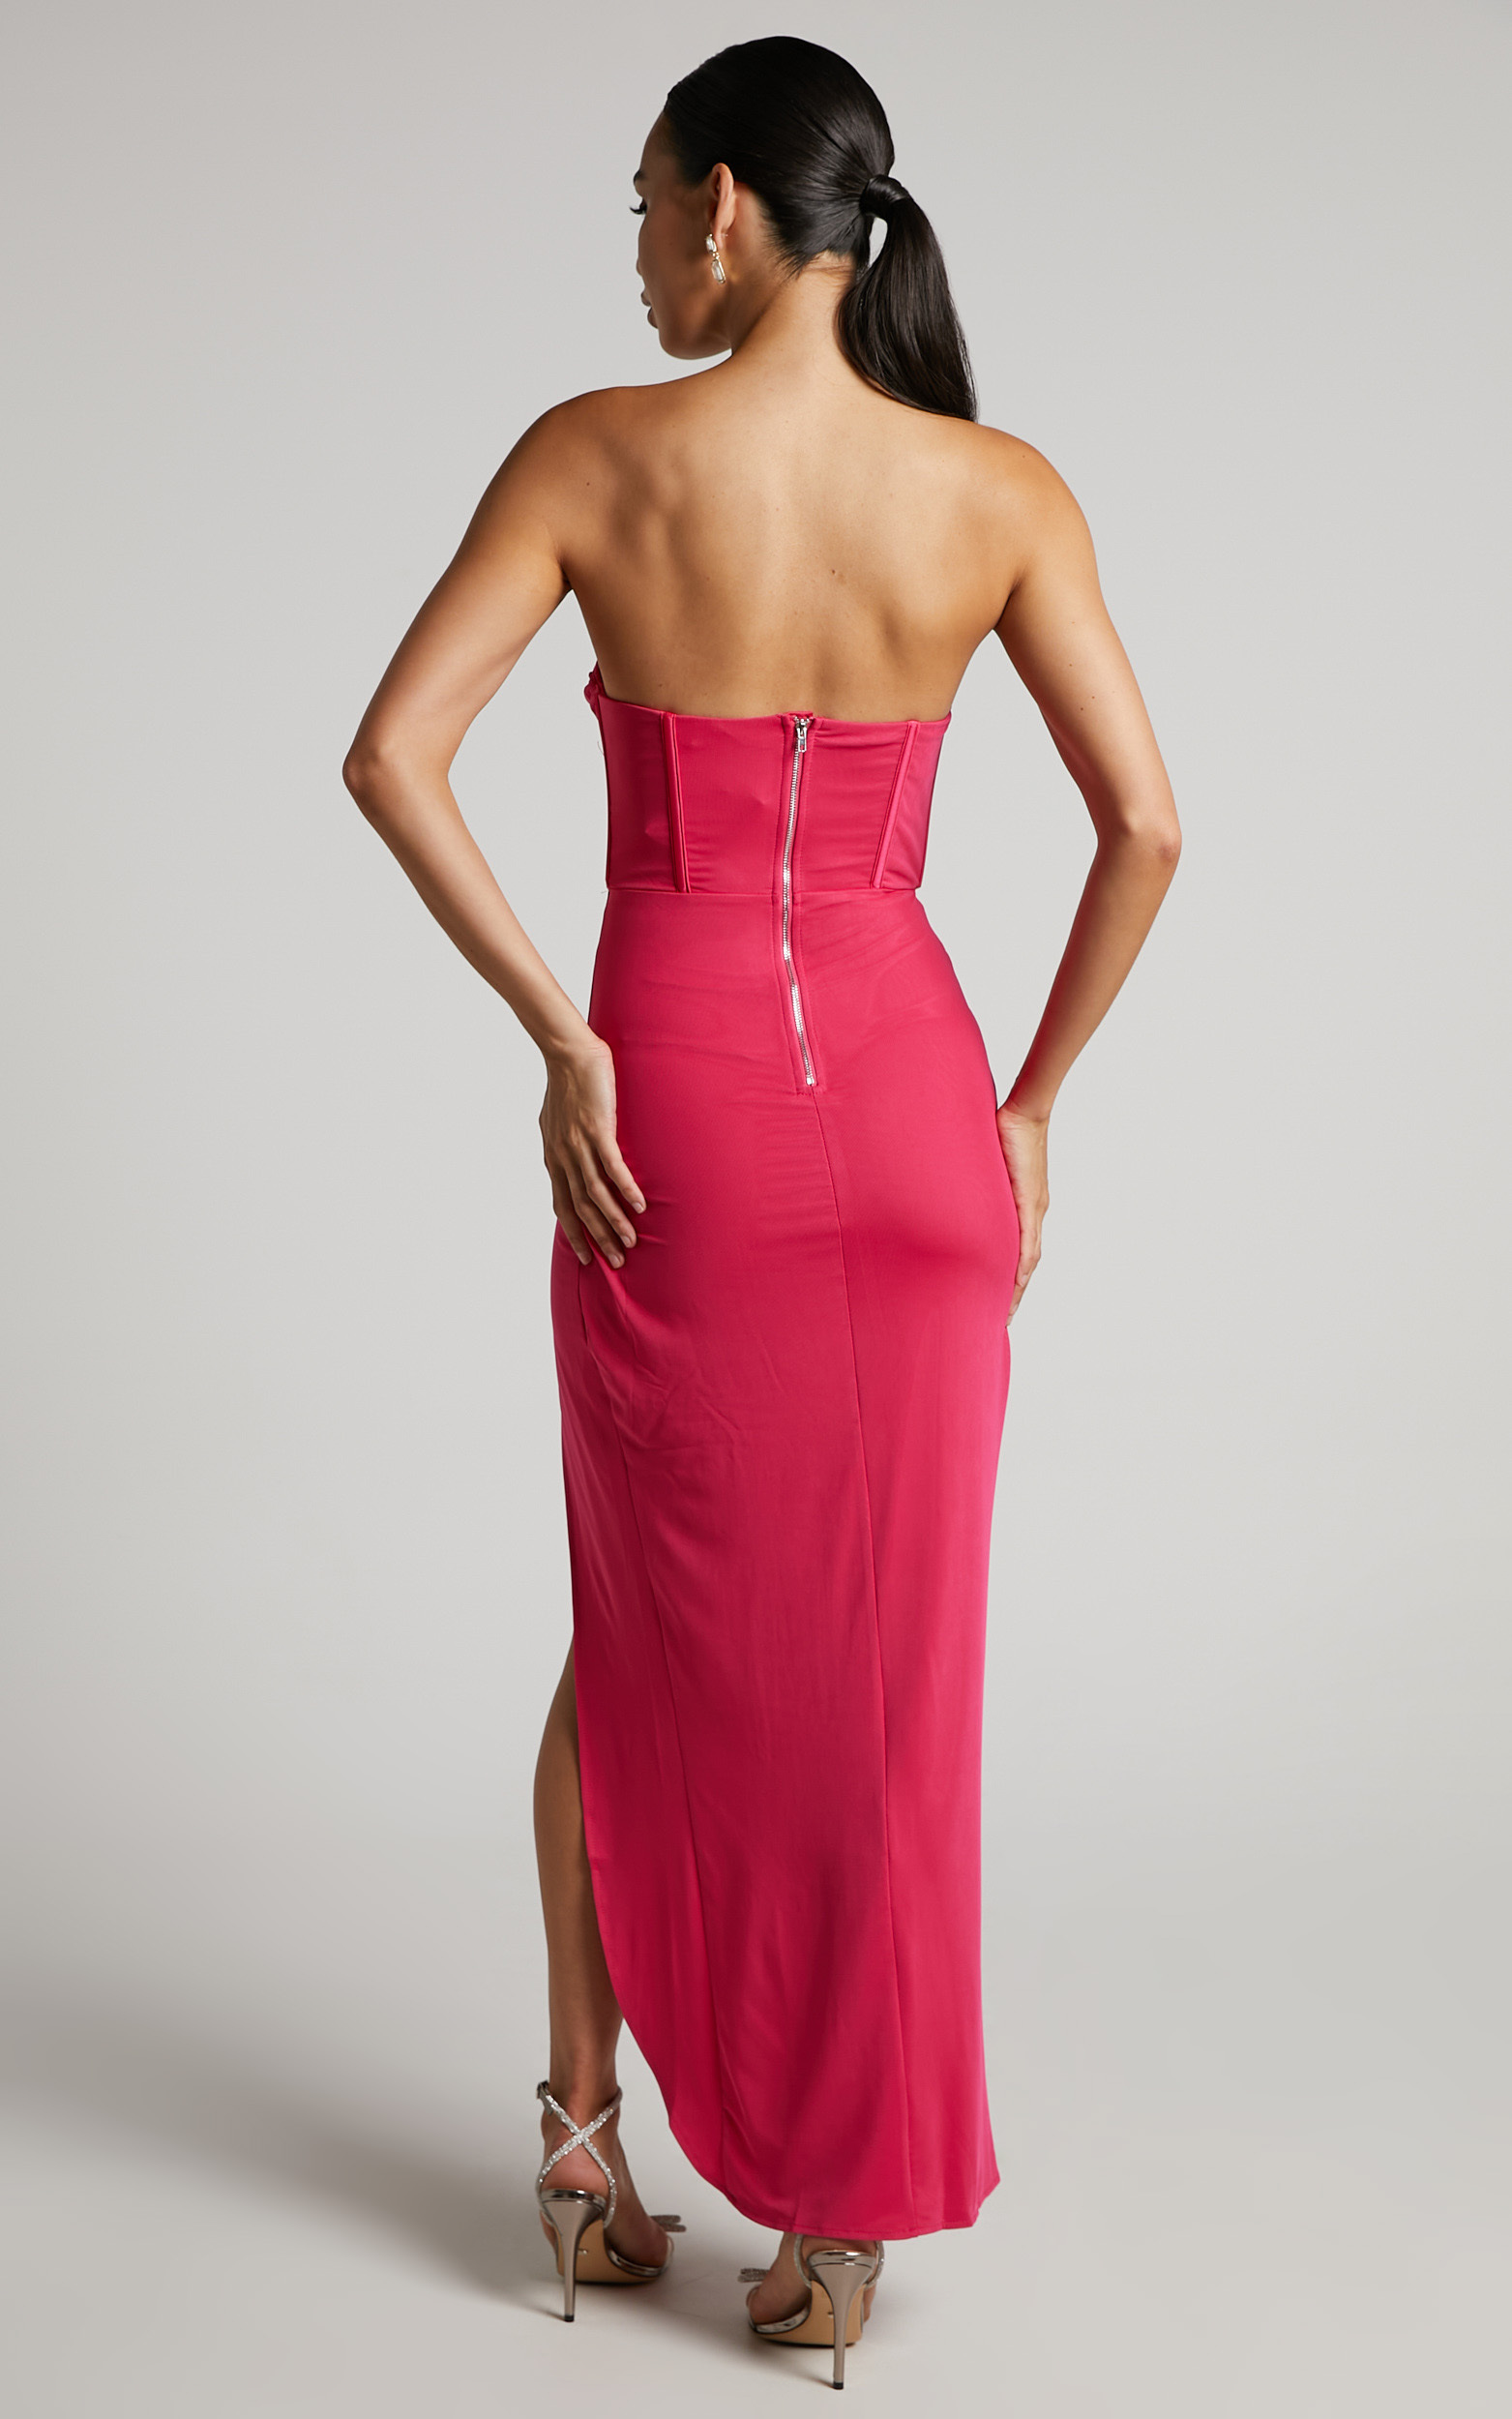 Nora Corset Detailing Dress in Hot Pink | Showpo USA